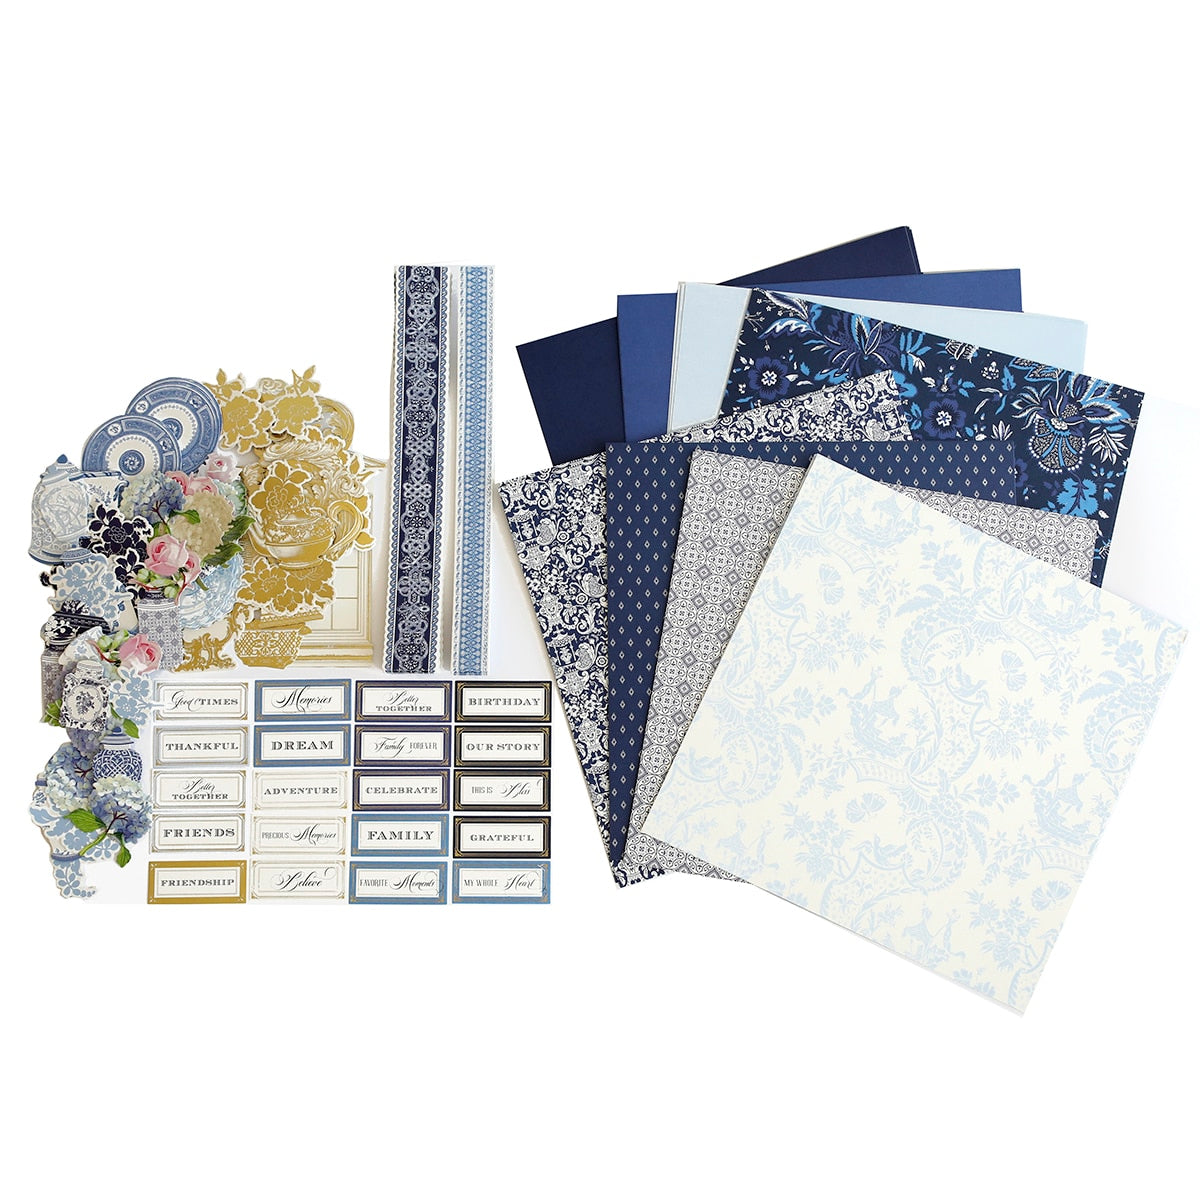 Basic Types of Scrapbook Paper